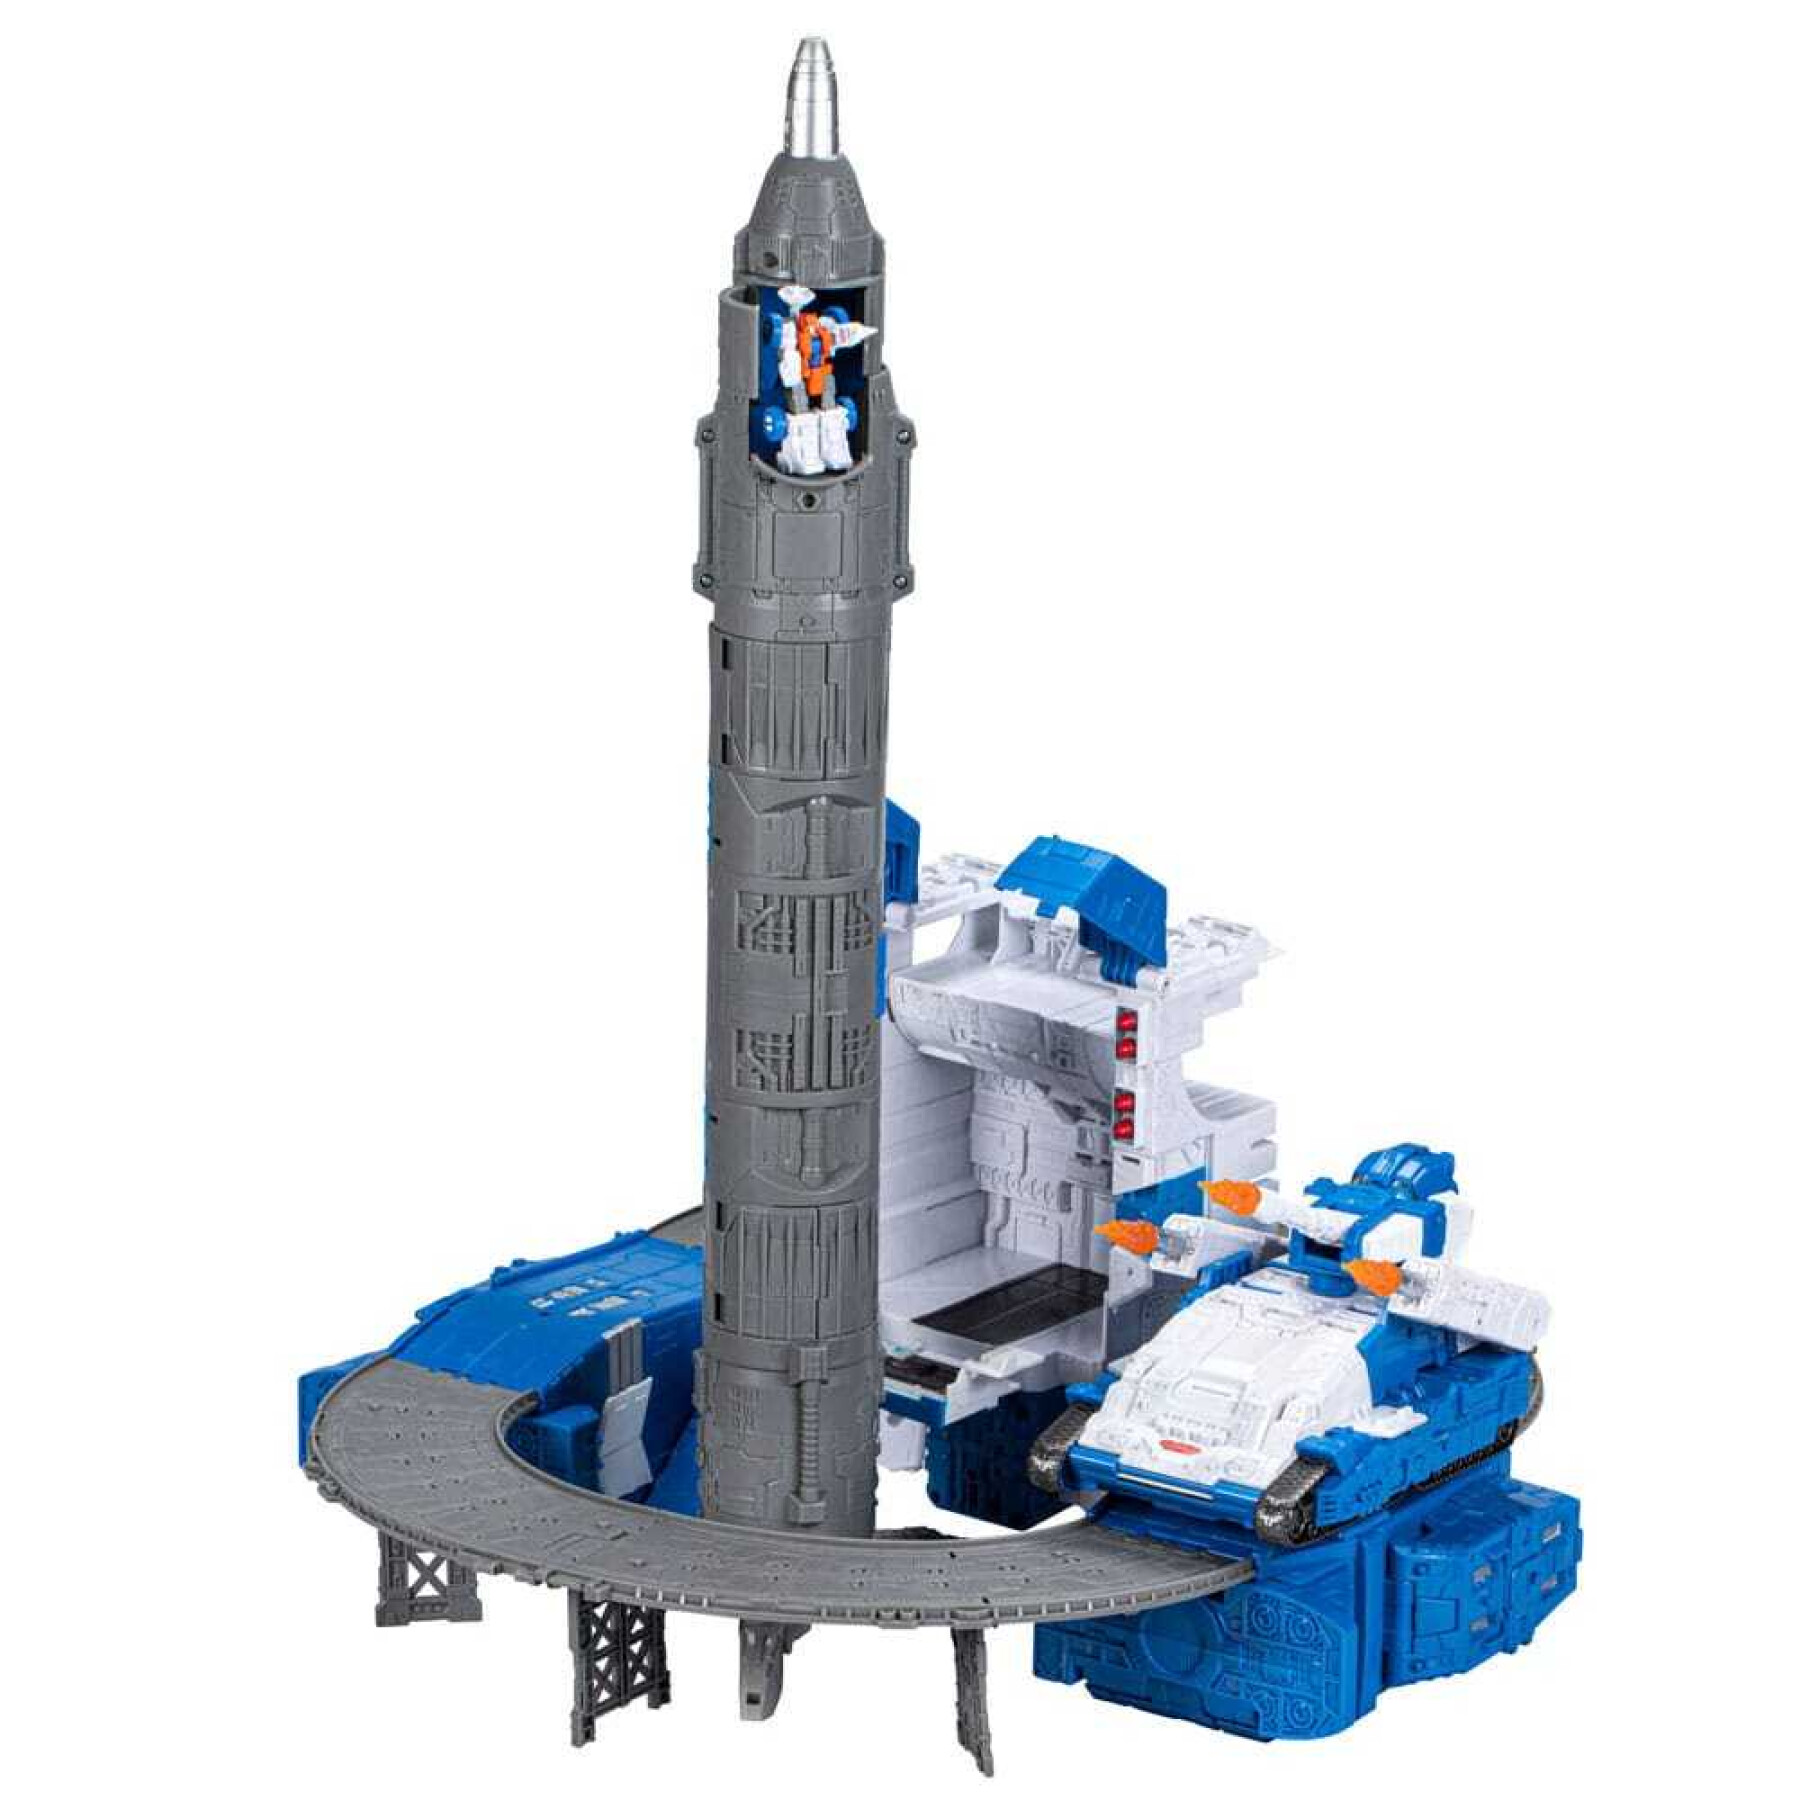 Figurina Hasbro Transformers Generations Legacy Titan Class Figurine Guardian Robot & Lunar-Tread 60 Cm